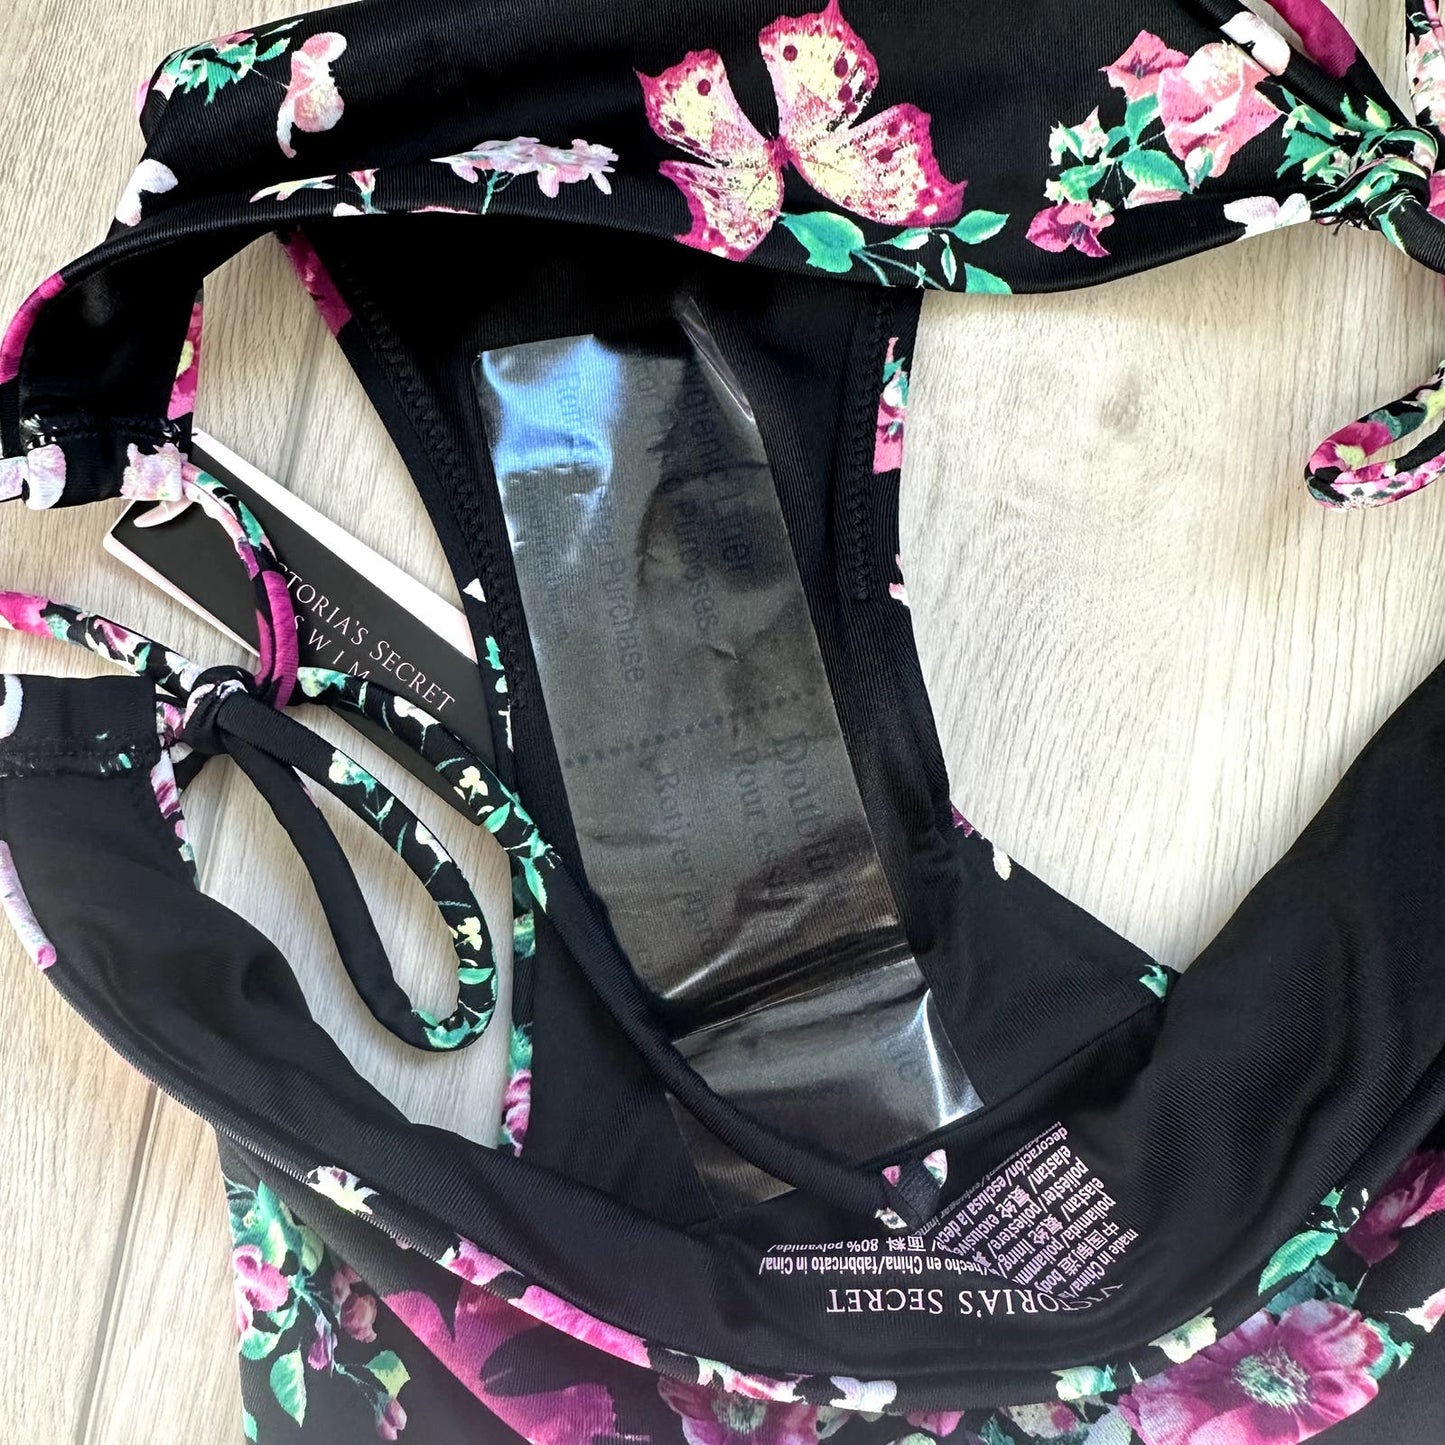 Victoria's Secret black floral 3 piece swim bikini set